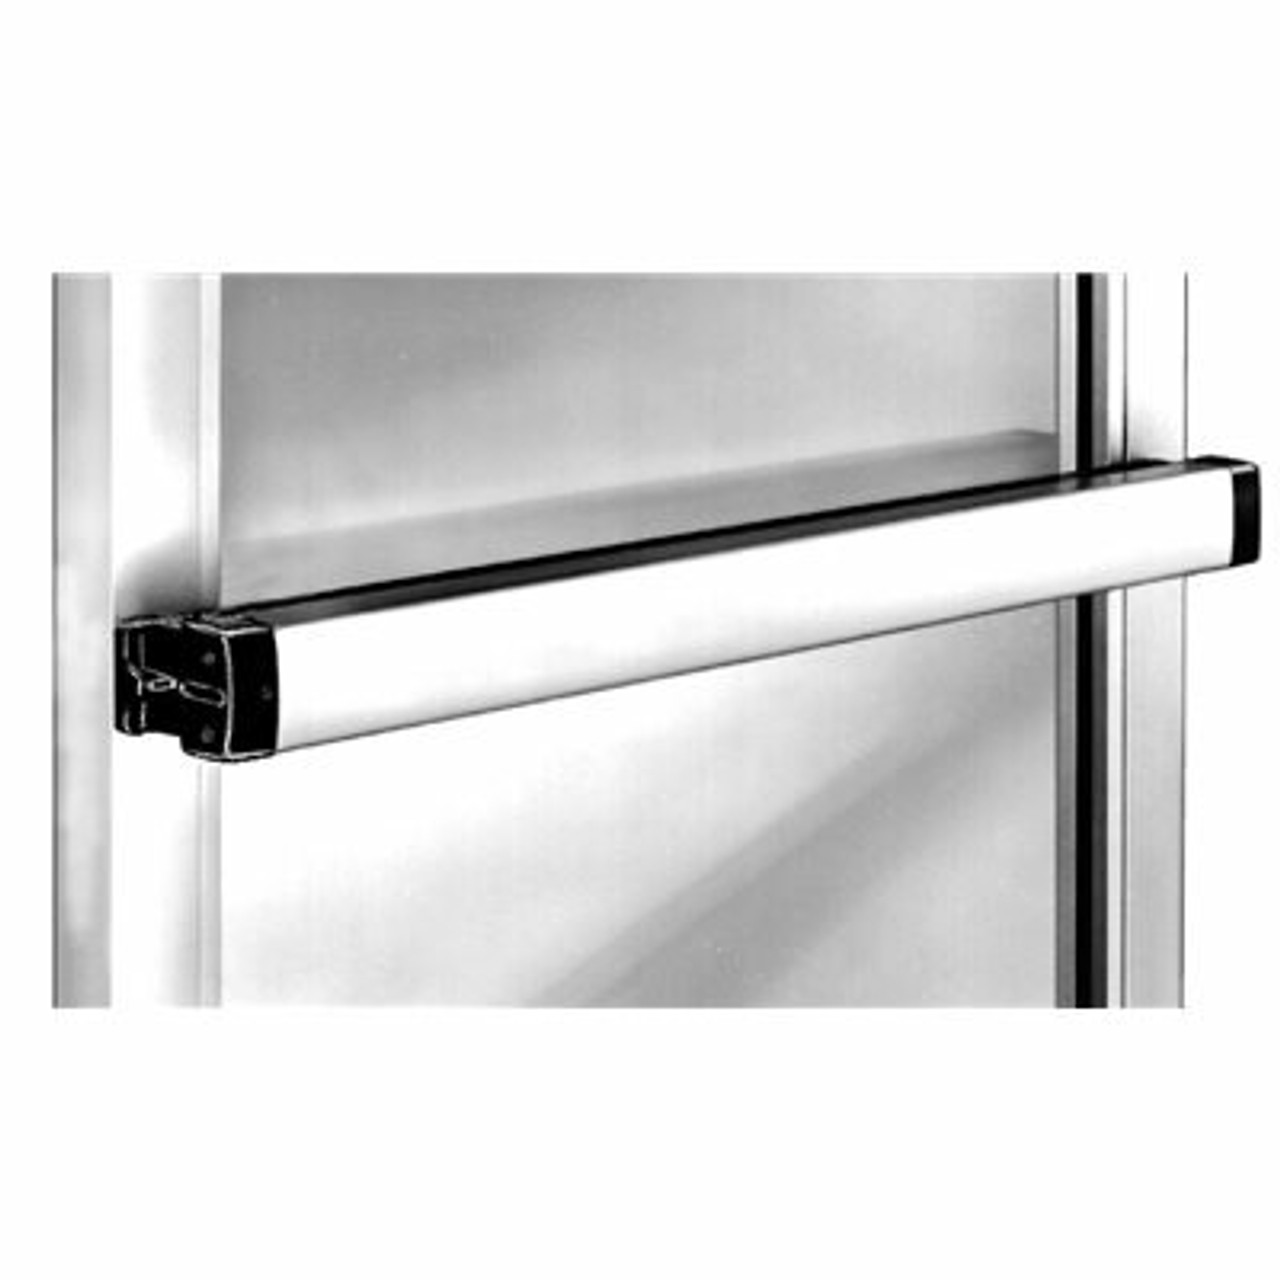 Adams Rite 8800 Series Rim Mounted Exit Narrow Stile Glass Doors - U000461